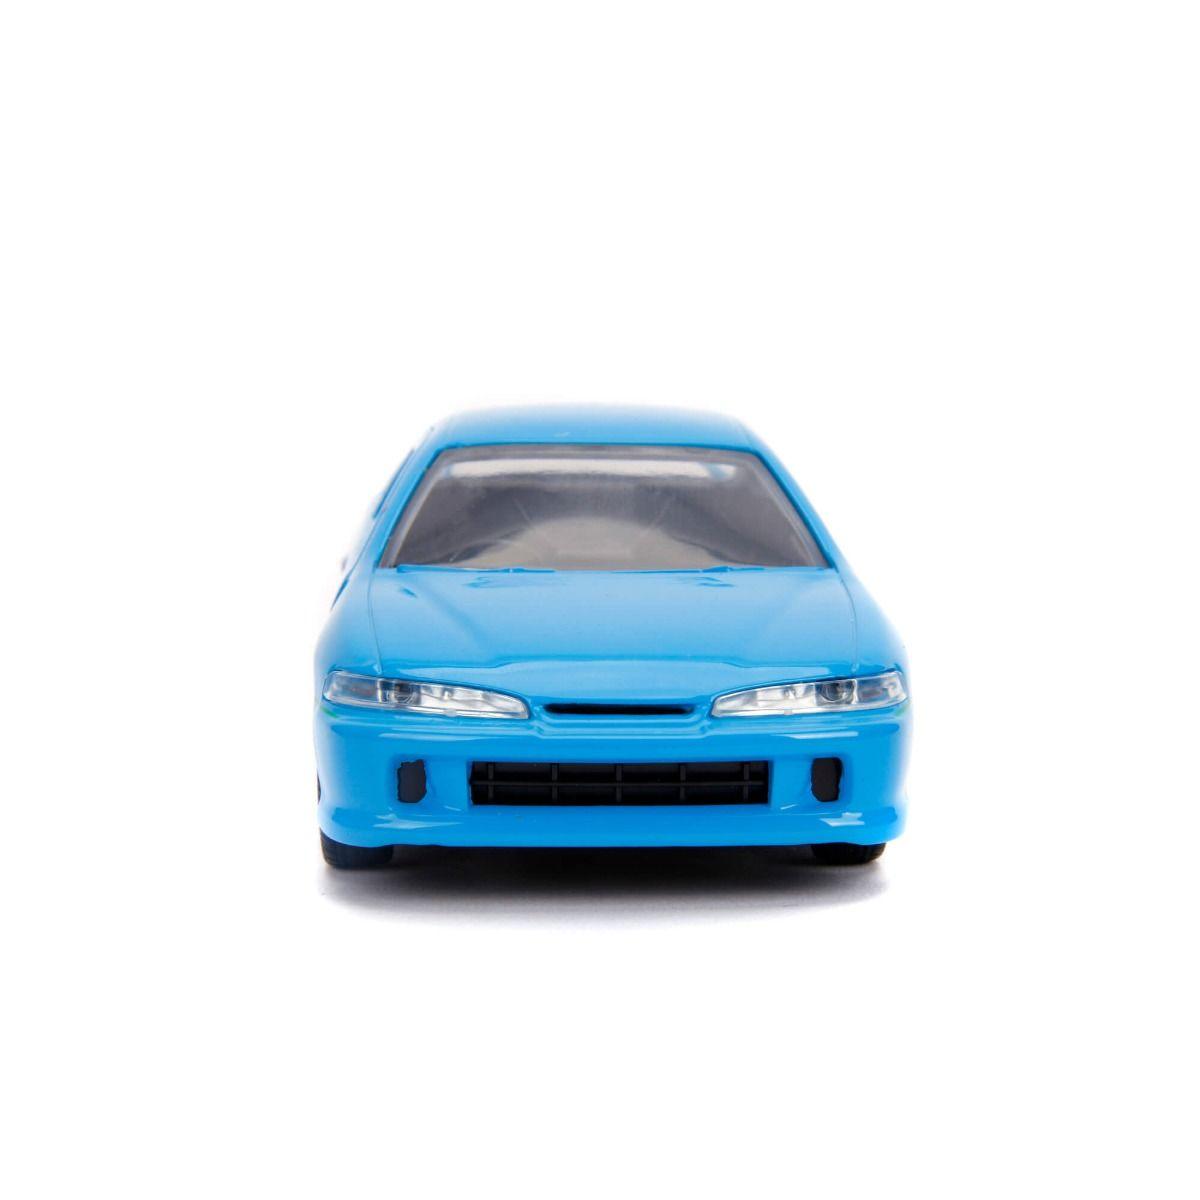 JAD31029 Fast and Furious - 1995 Honda Integra Type-R 1:32 Scale Hollywood Ride - Jada Toys - Titan Pop Culture